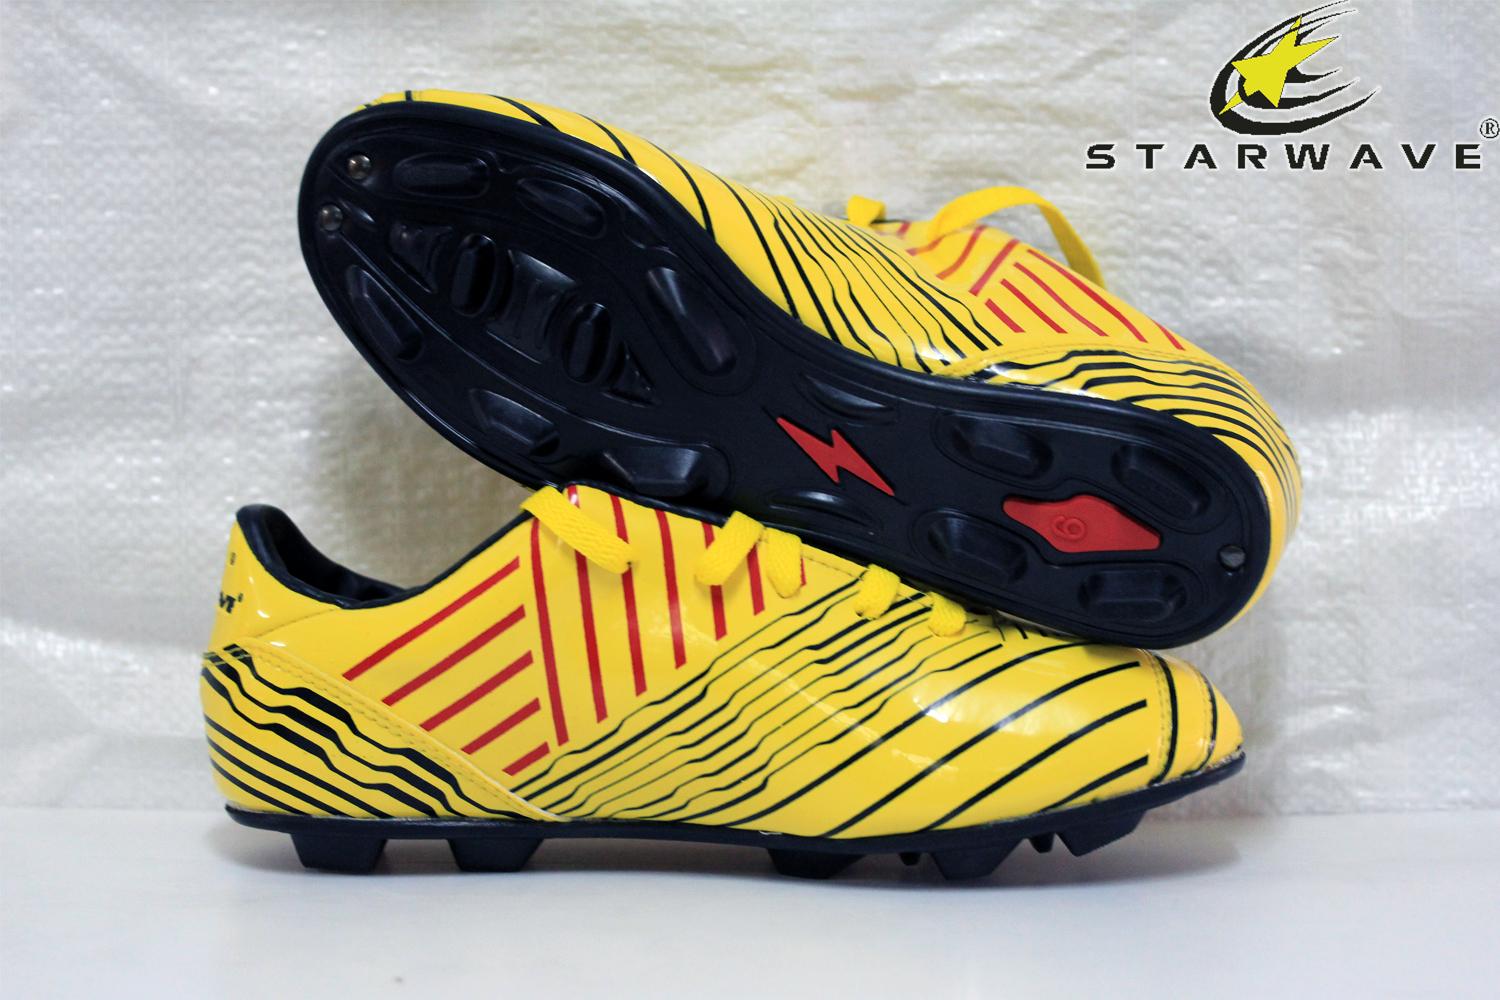 Starwave รองเท้า ฟุตบอลเด็ก (สตั๊ด ) Football Shoes SF64 เบอร์ 0-4.5  สีเหลือง